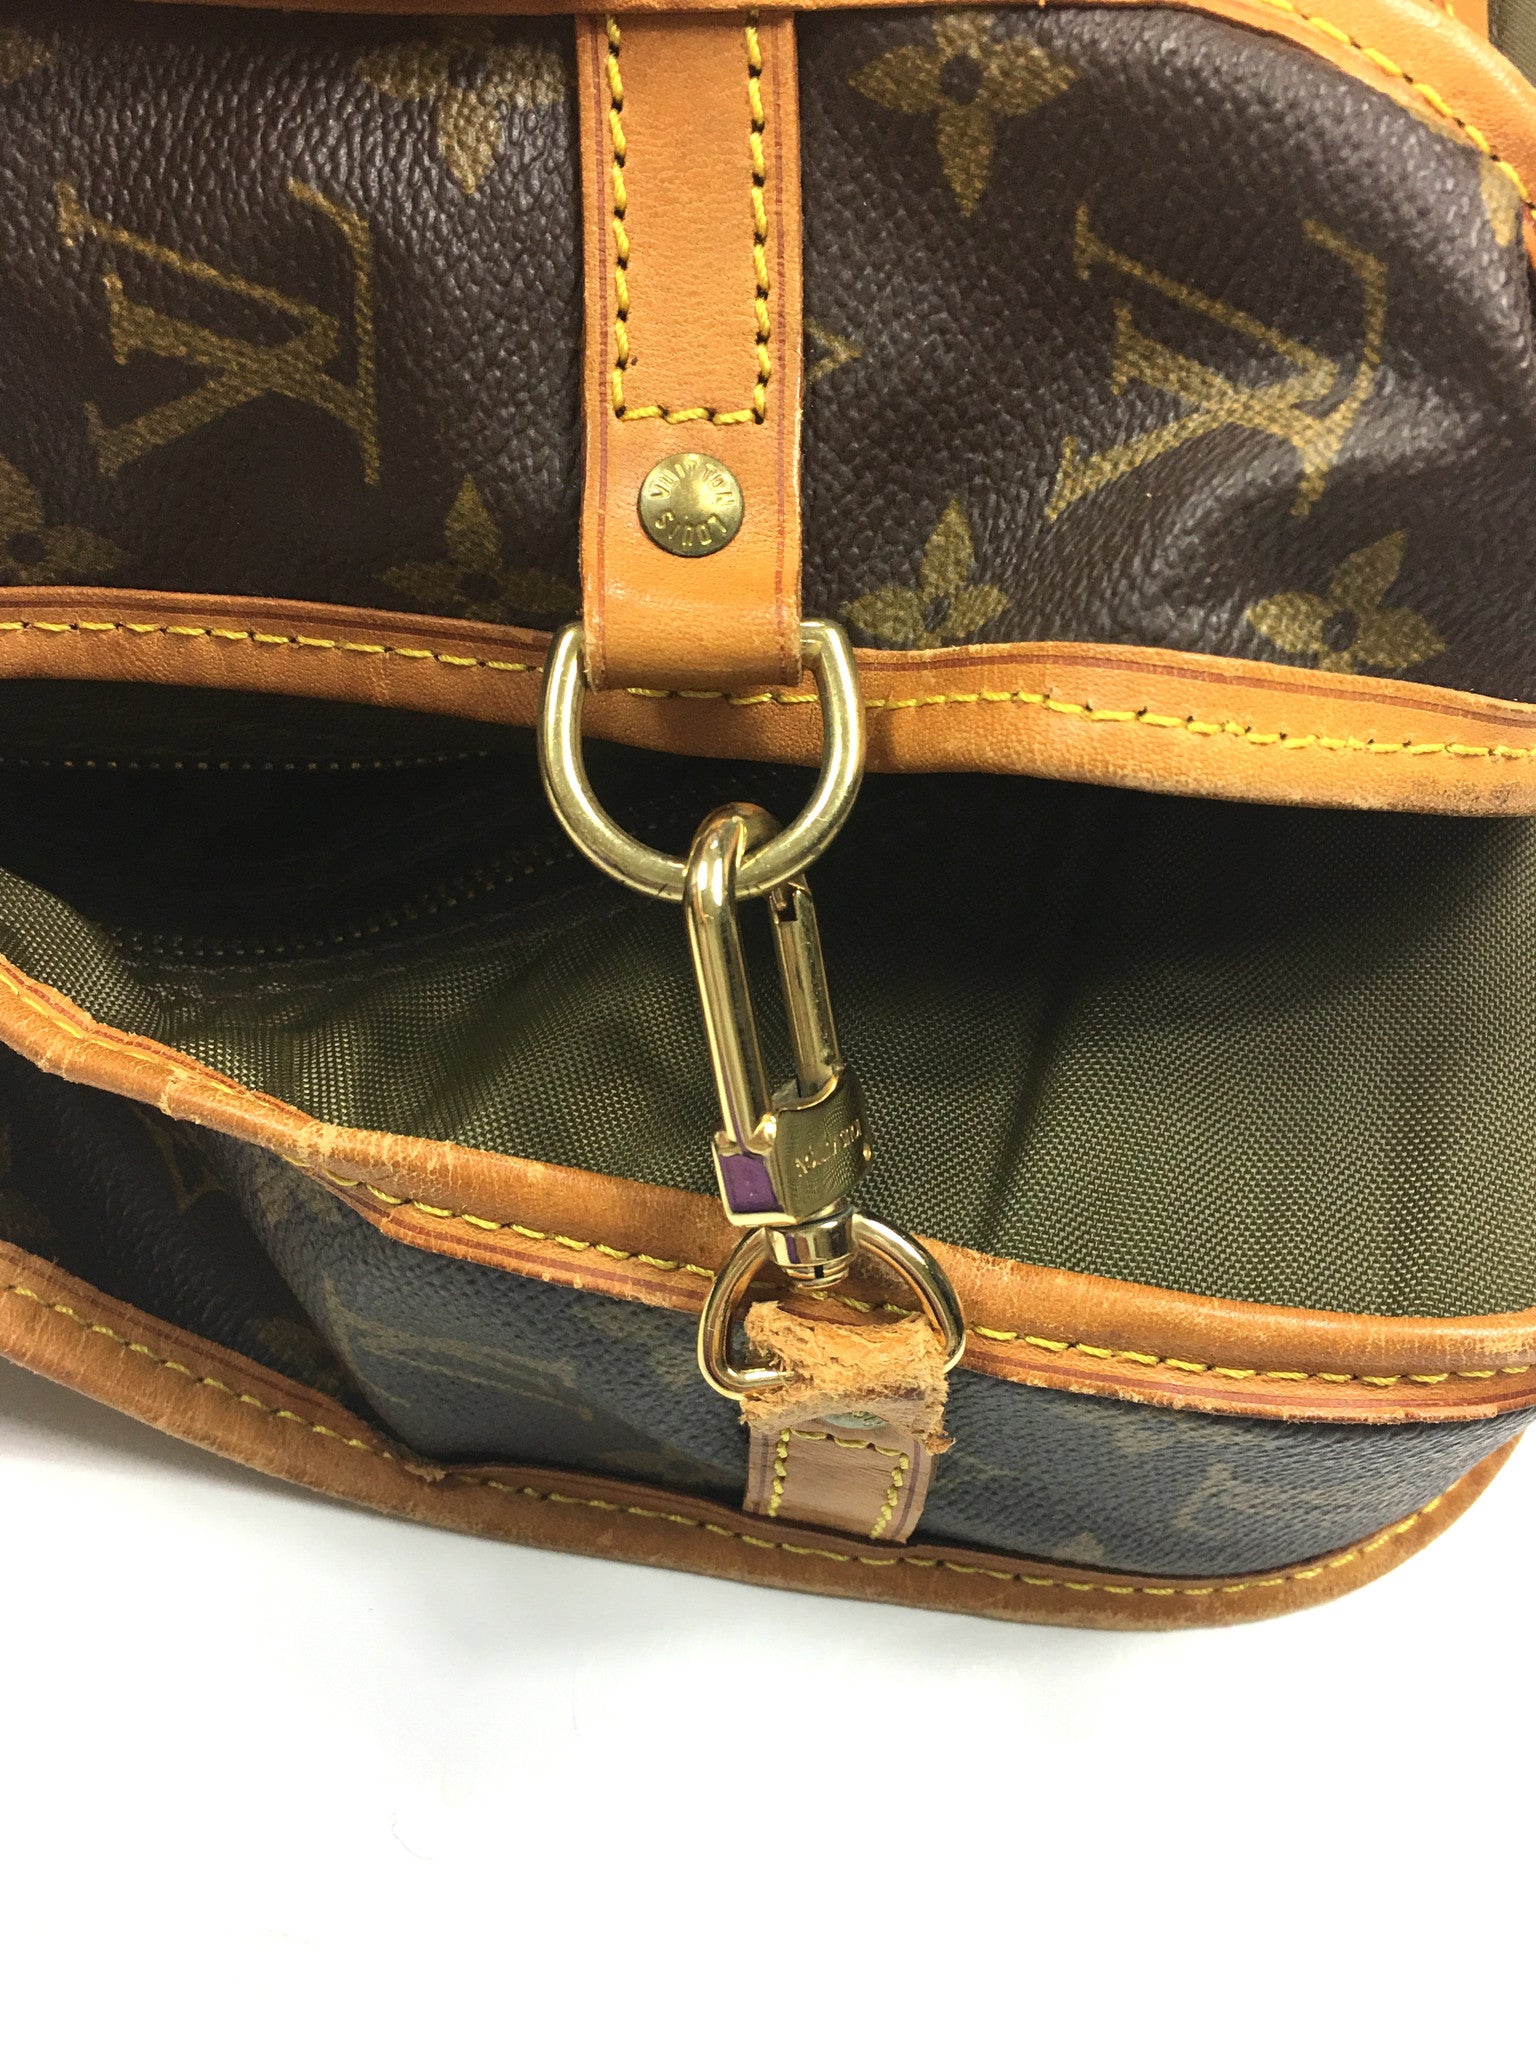 RARE Vintage FC LOUIS VUITTON Garment Bag HANGERS Luggage Travel